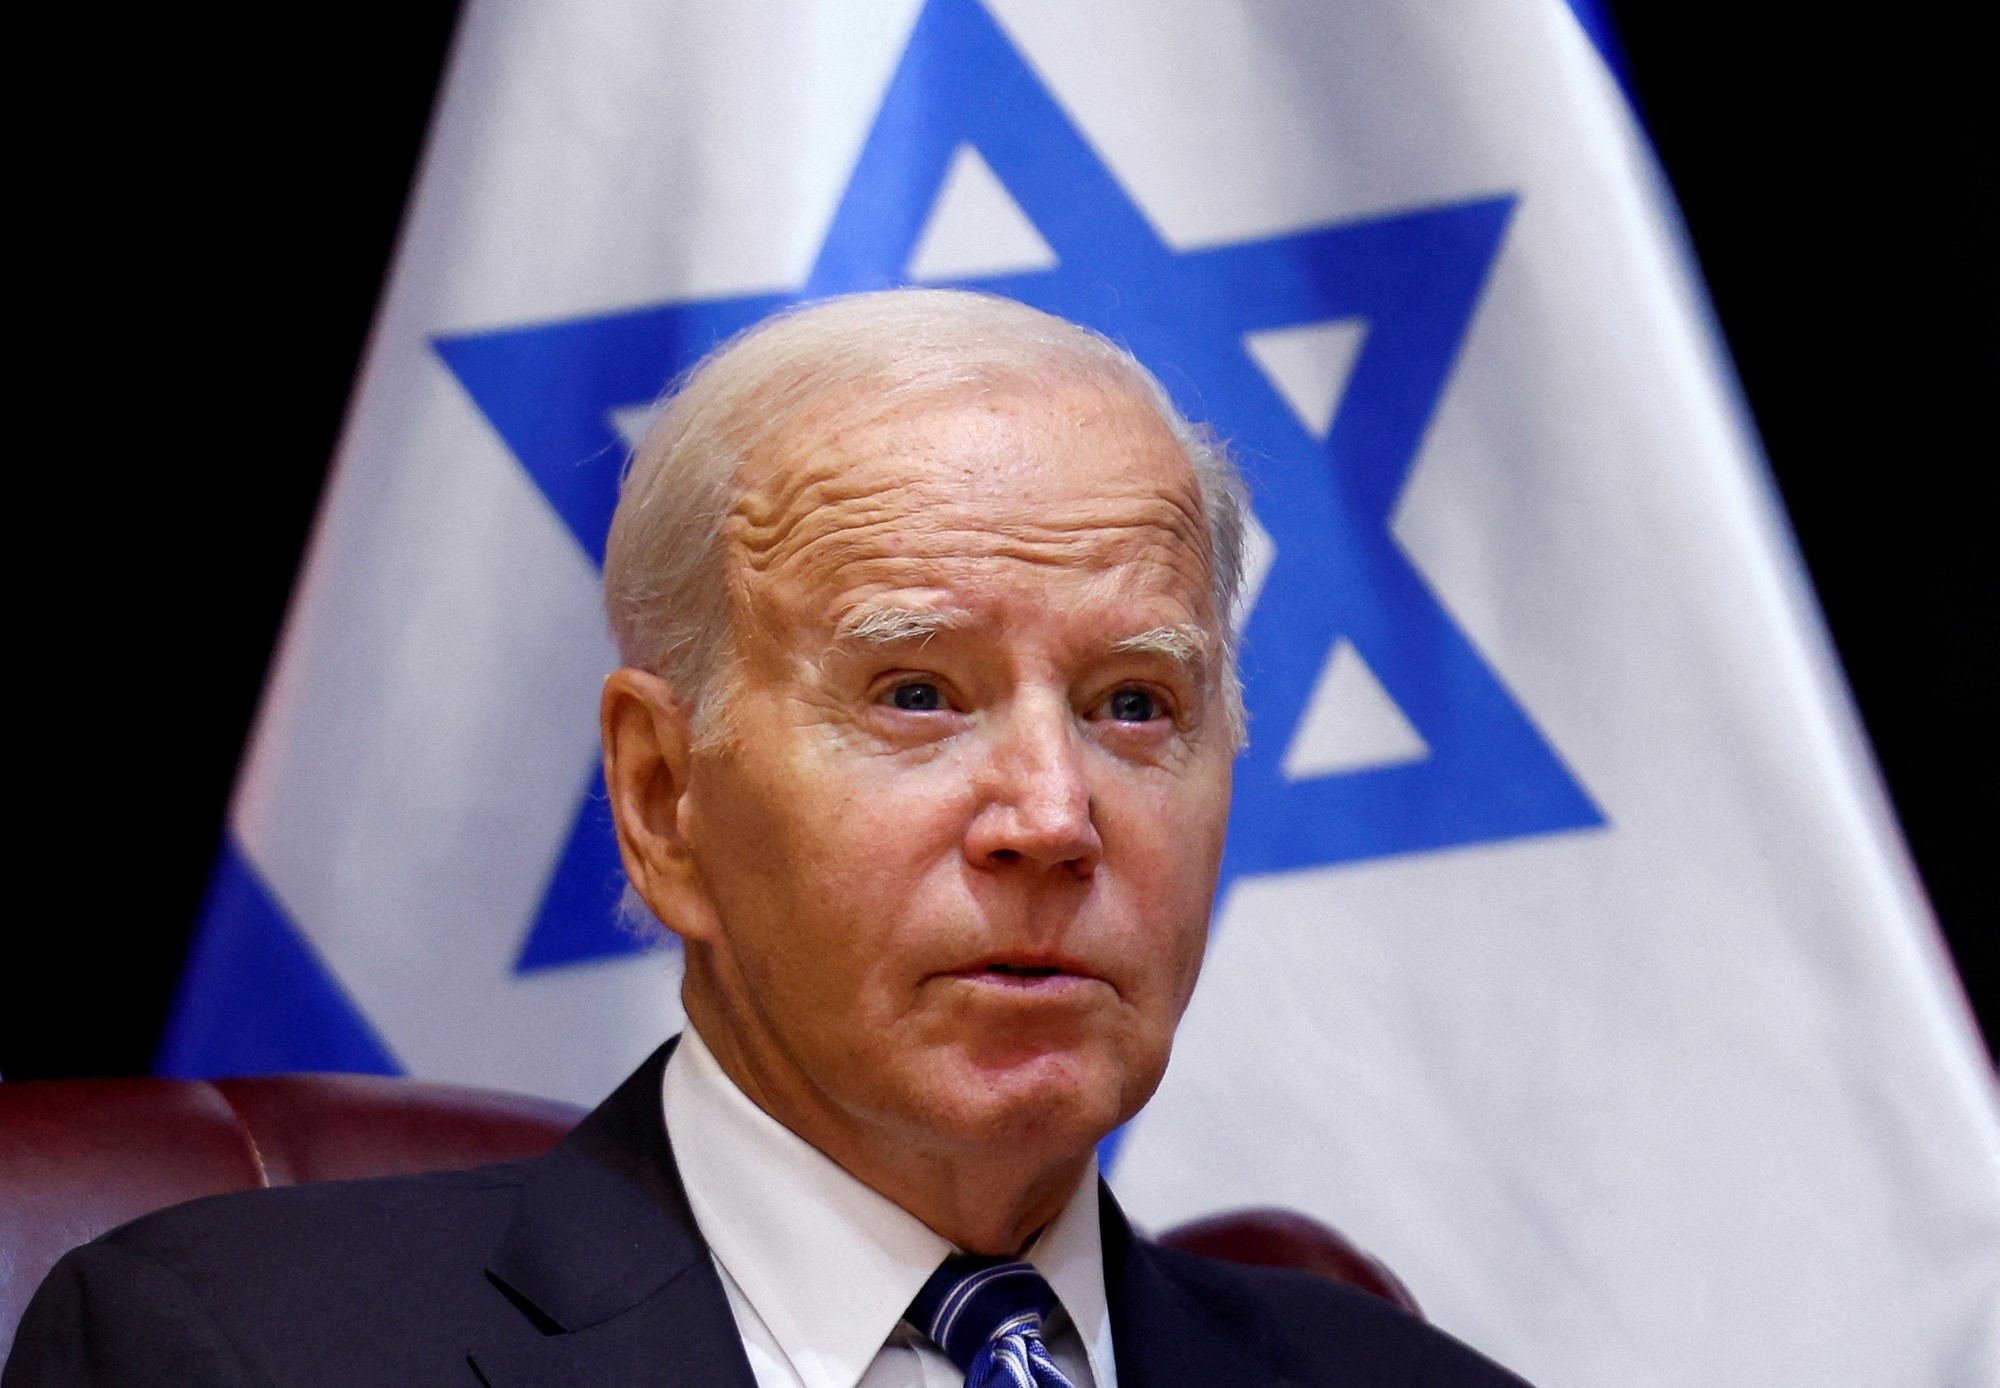 Portrait photo of US President Joe Biden sitting in front of an Israeli flag.